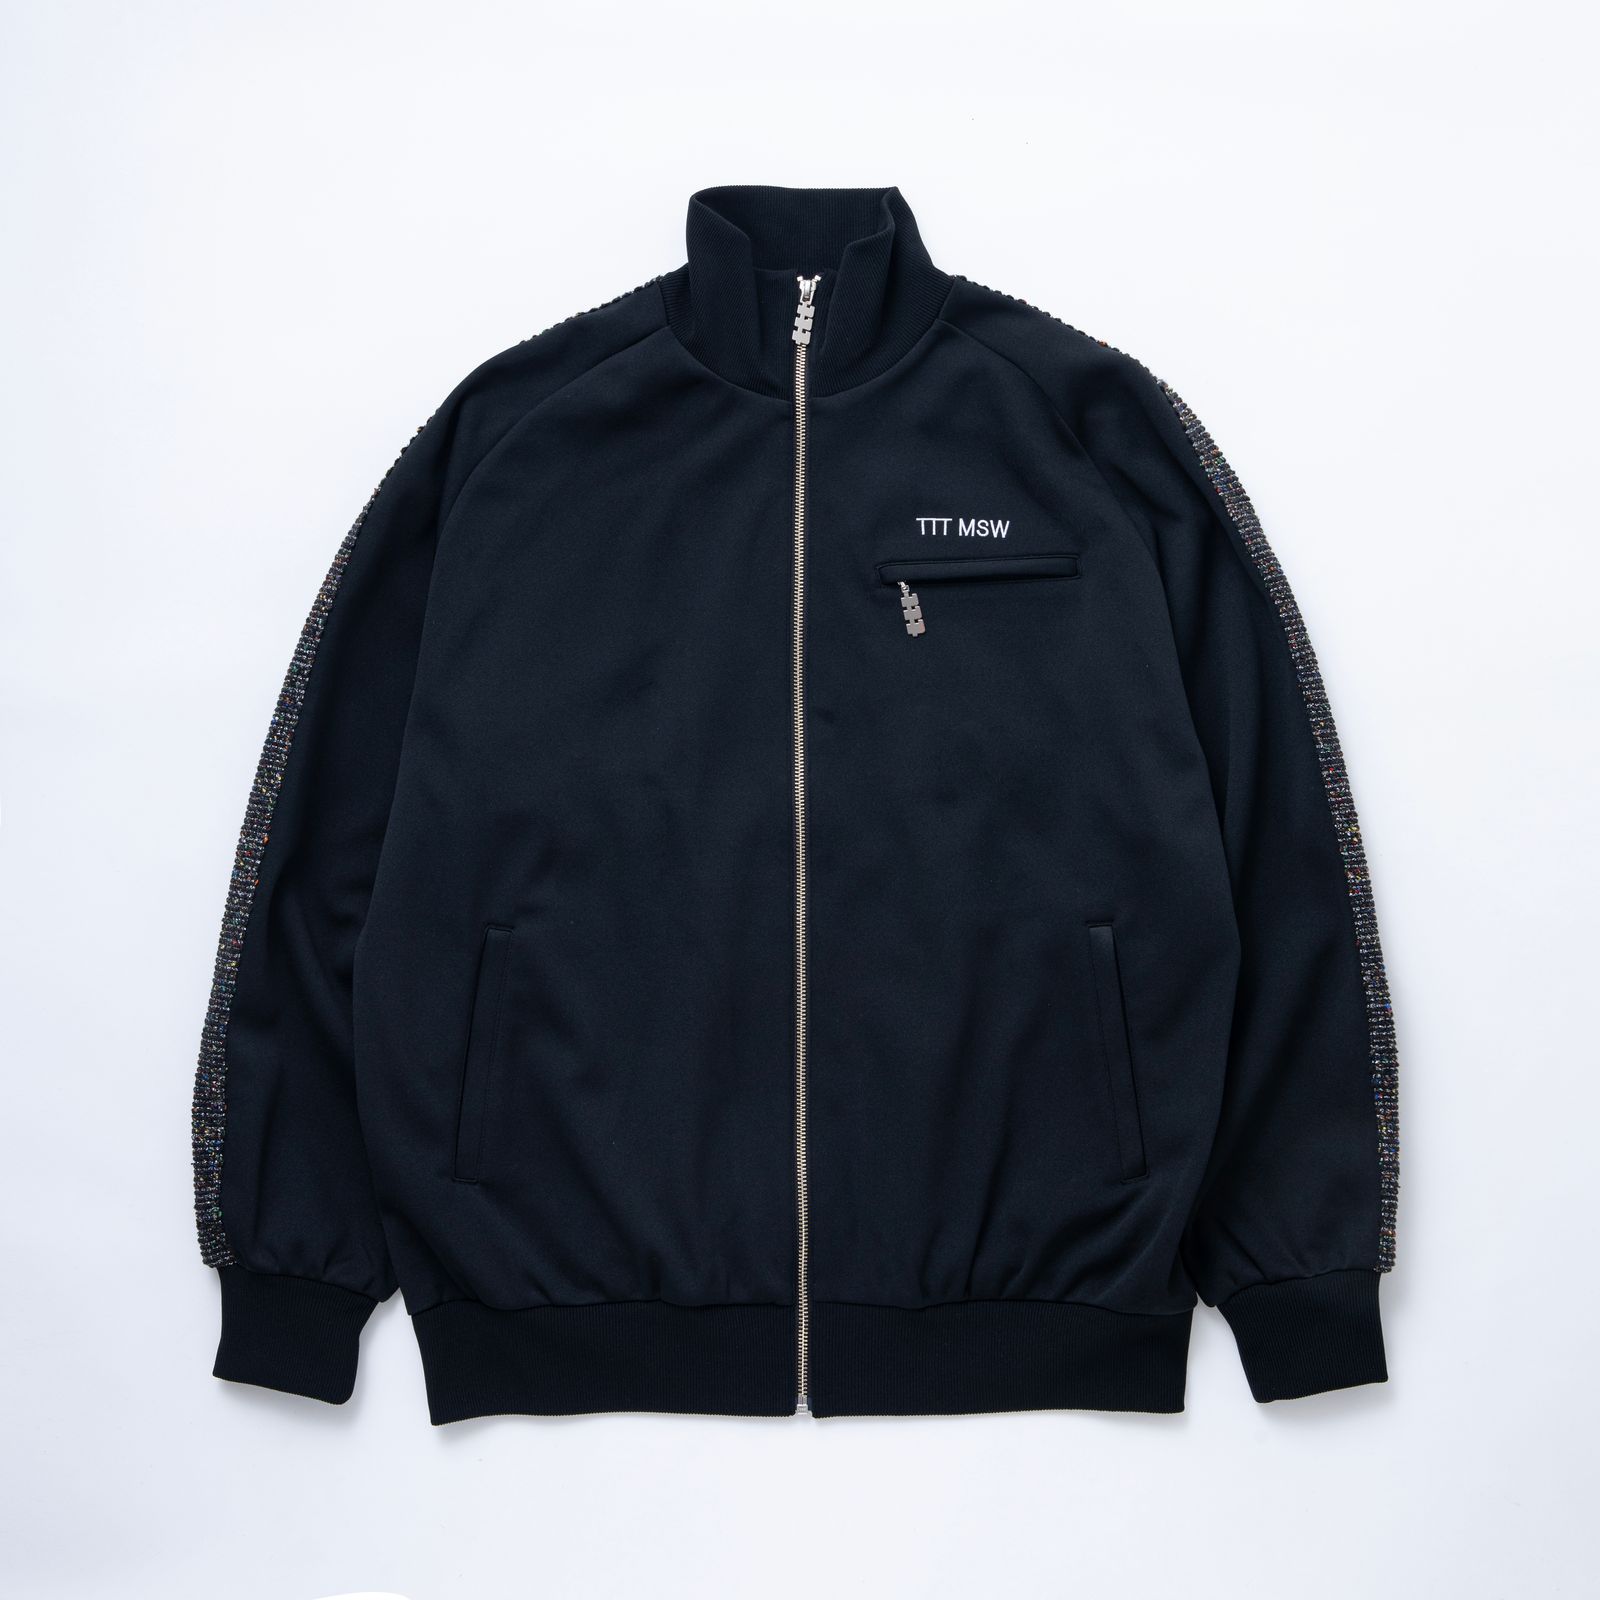 TTT MSW Track suit jacket Black表地POLYESTE - ブルゾン